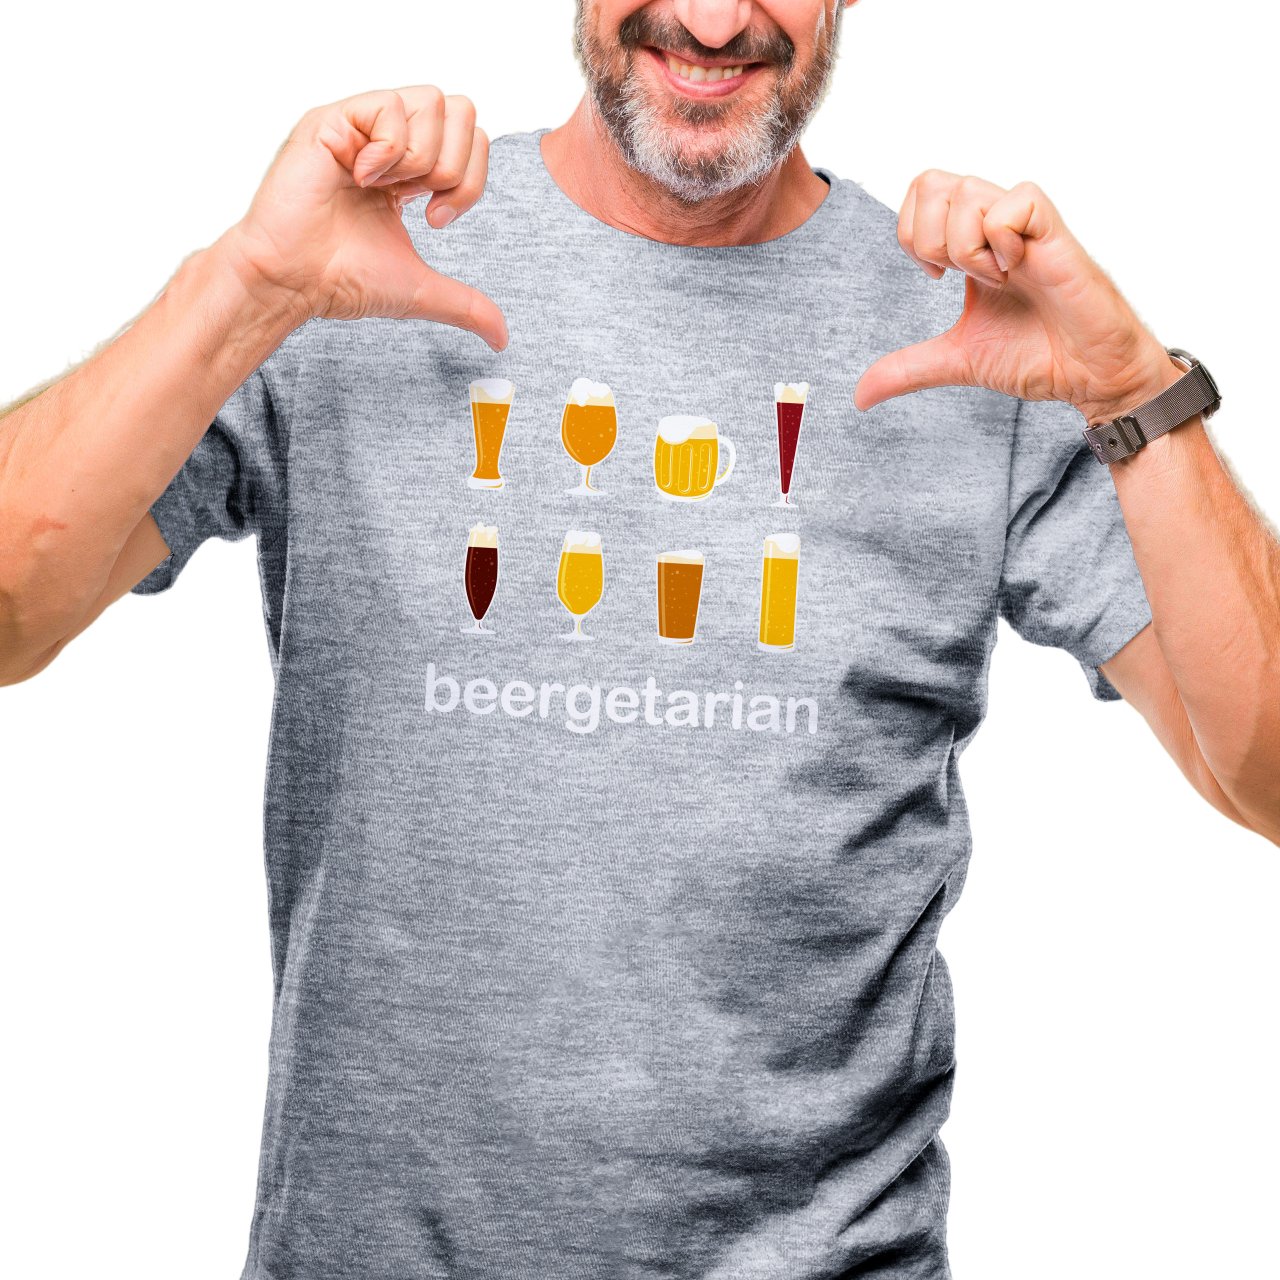 Pánské tričko s potiskem “Beergetarian”